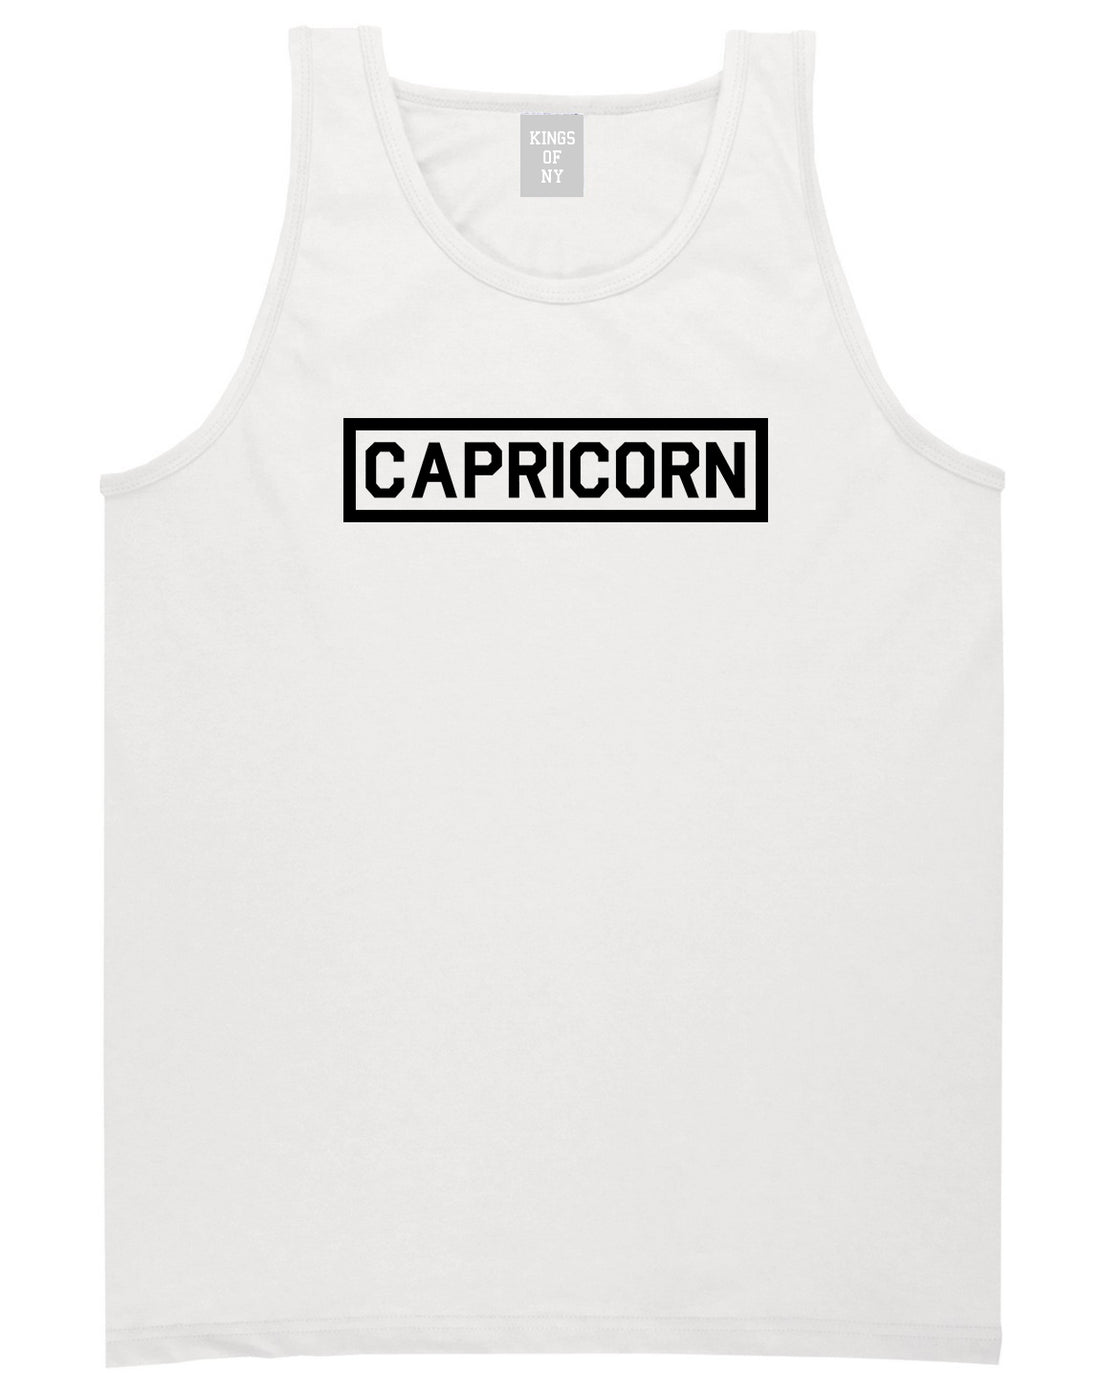 Capricorn Horoscope Sign Mens White Tank Top Shirt by KINGS OF NY